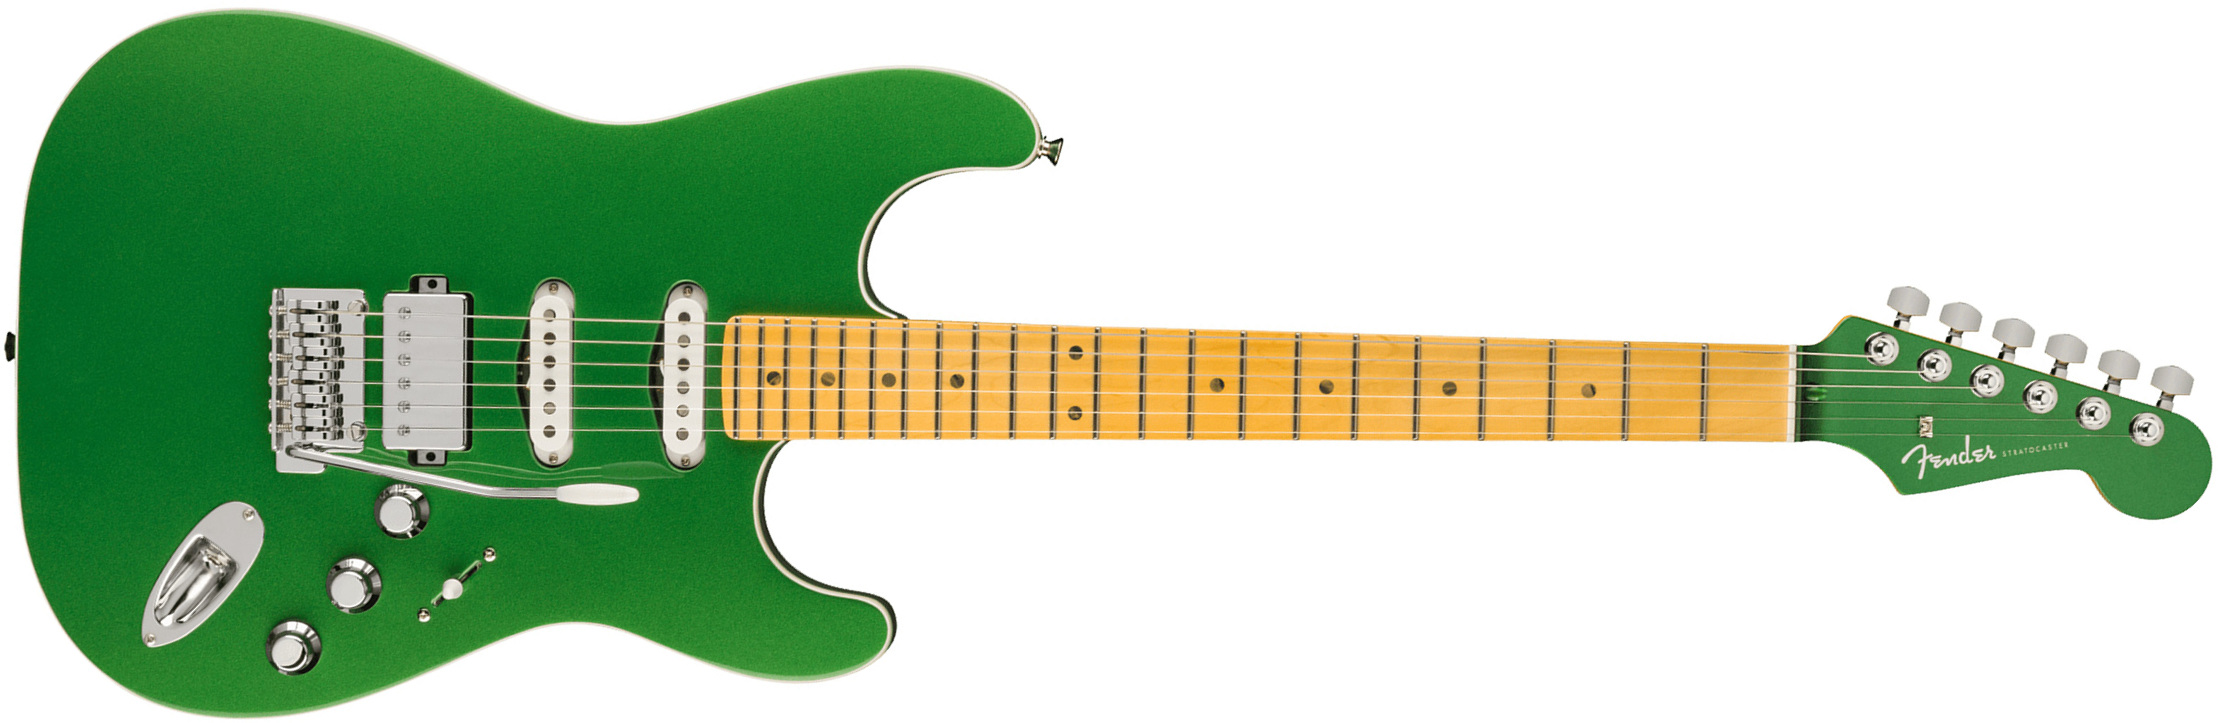 Fender Strat Aerodyne Special Jap Trem Hss Mn - Speed Green Metallic - Guitarra eléctrica con forma de str. - Main picture